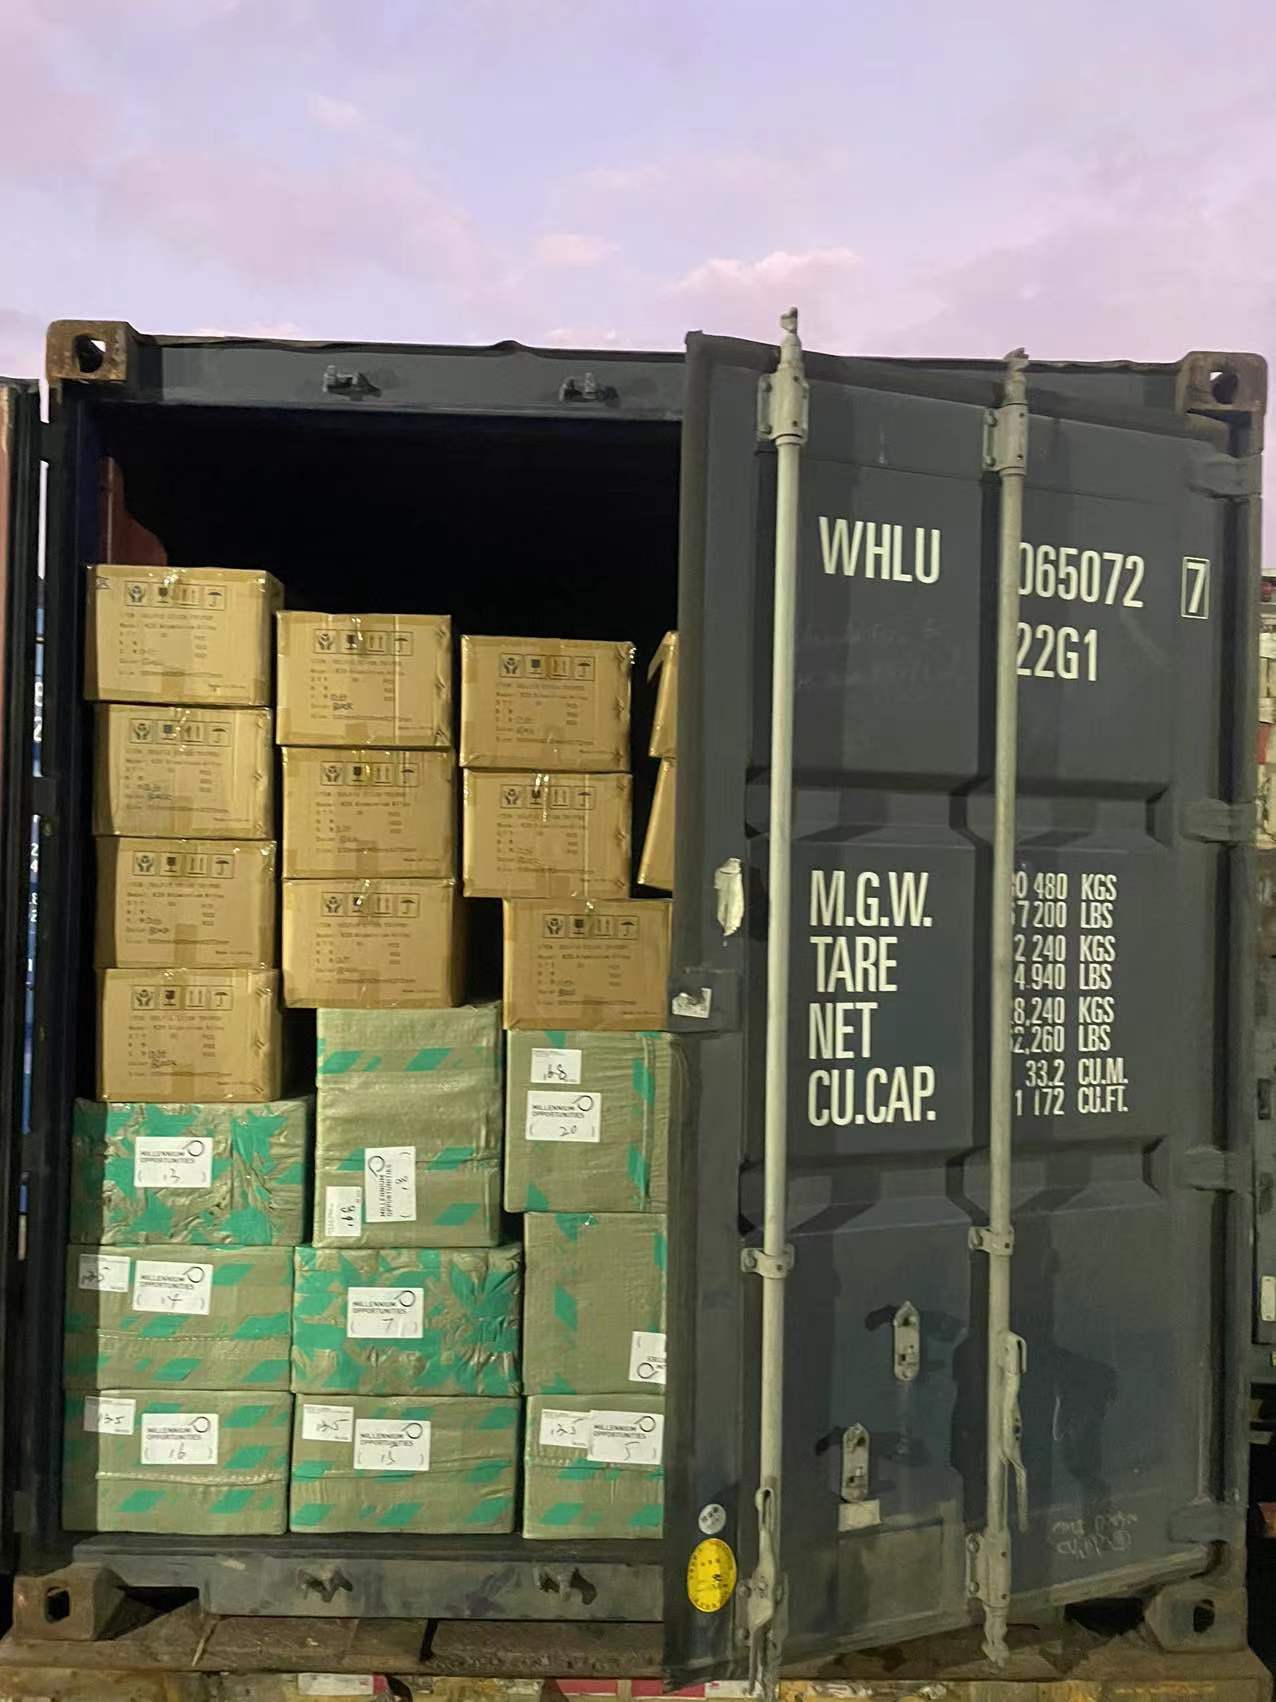 International freight forwarder from Shenzhen, China to DUBAI, UAE